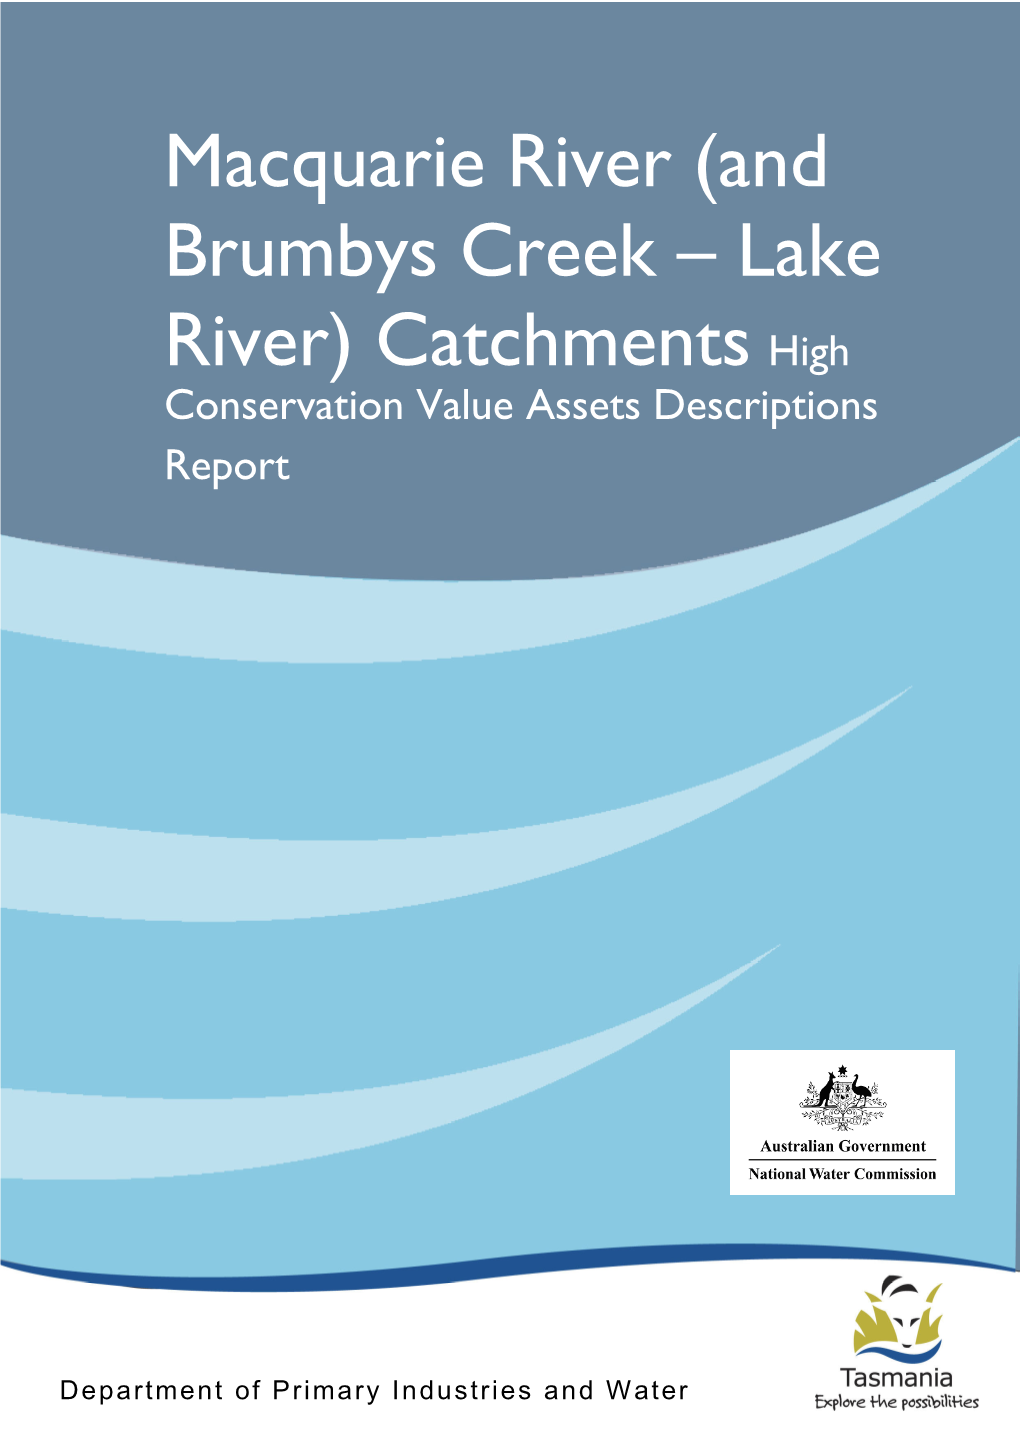 Macquarie River (And Brumbys Creek – Lake River) Catchments High Conservation Value Assets Descriptions Report